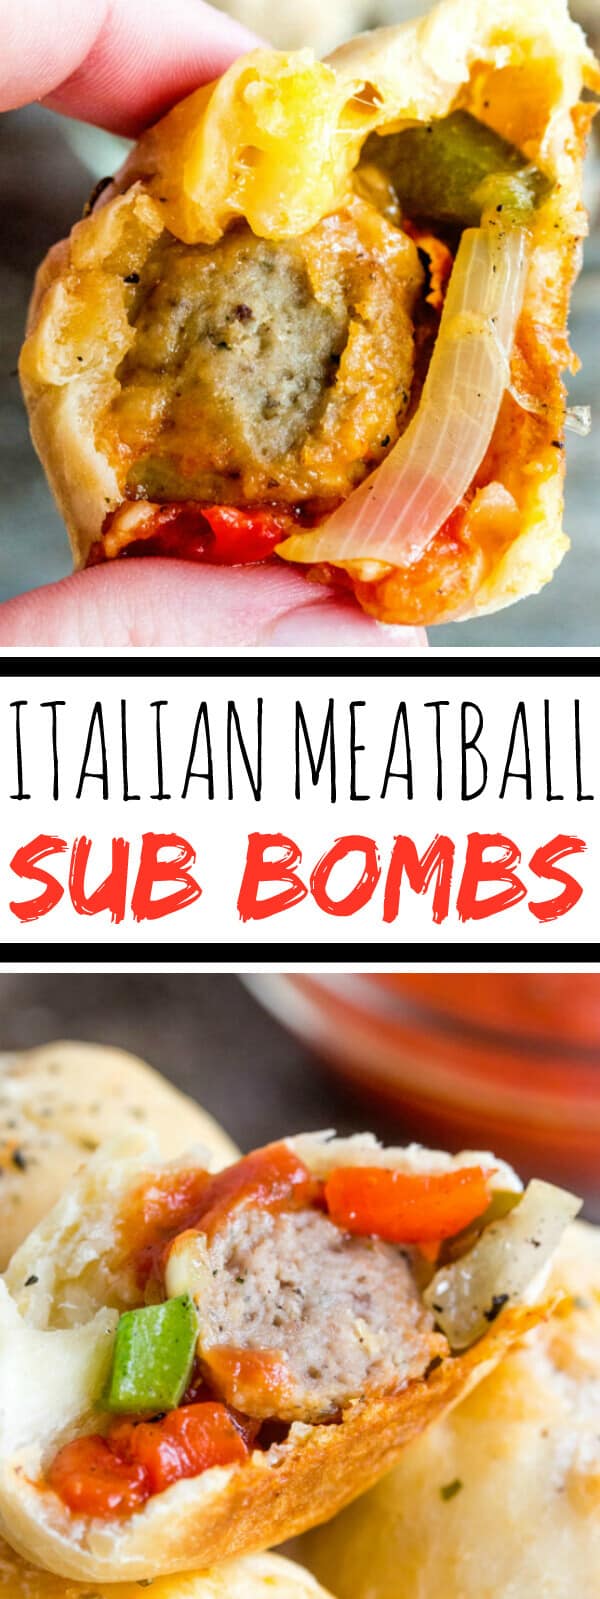 Italian Meatball Sub Bombs